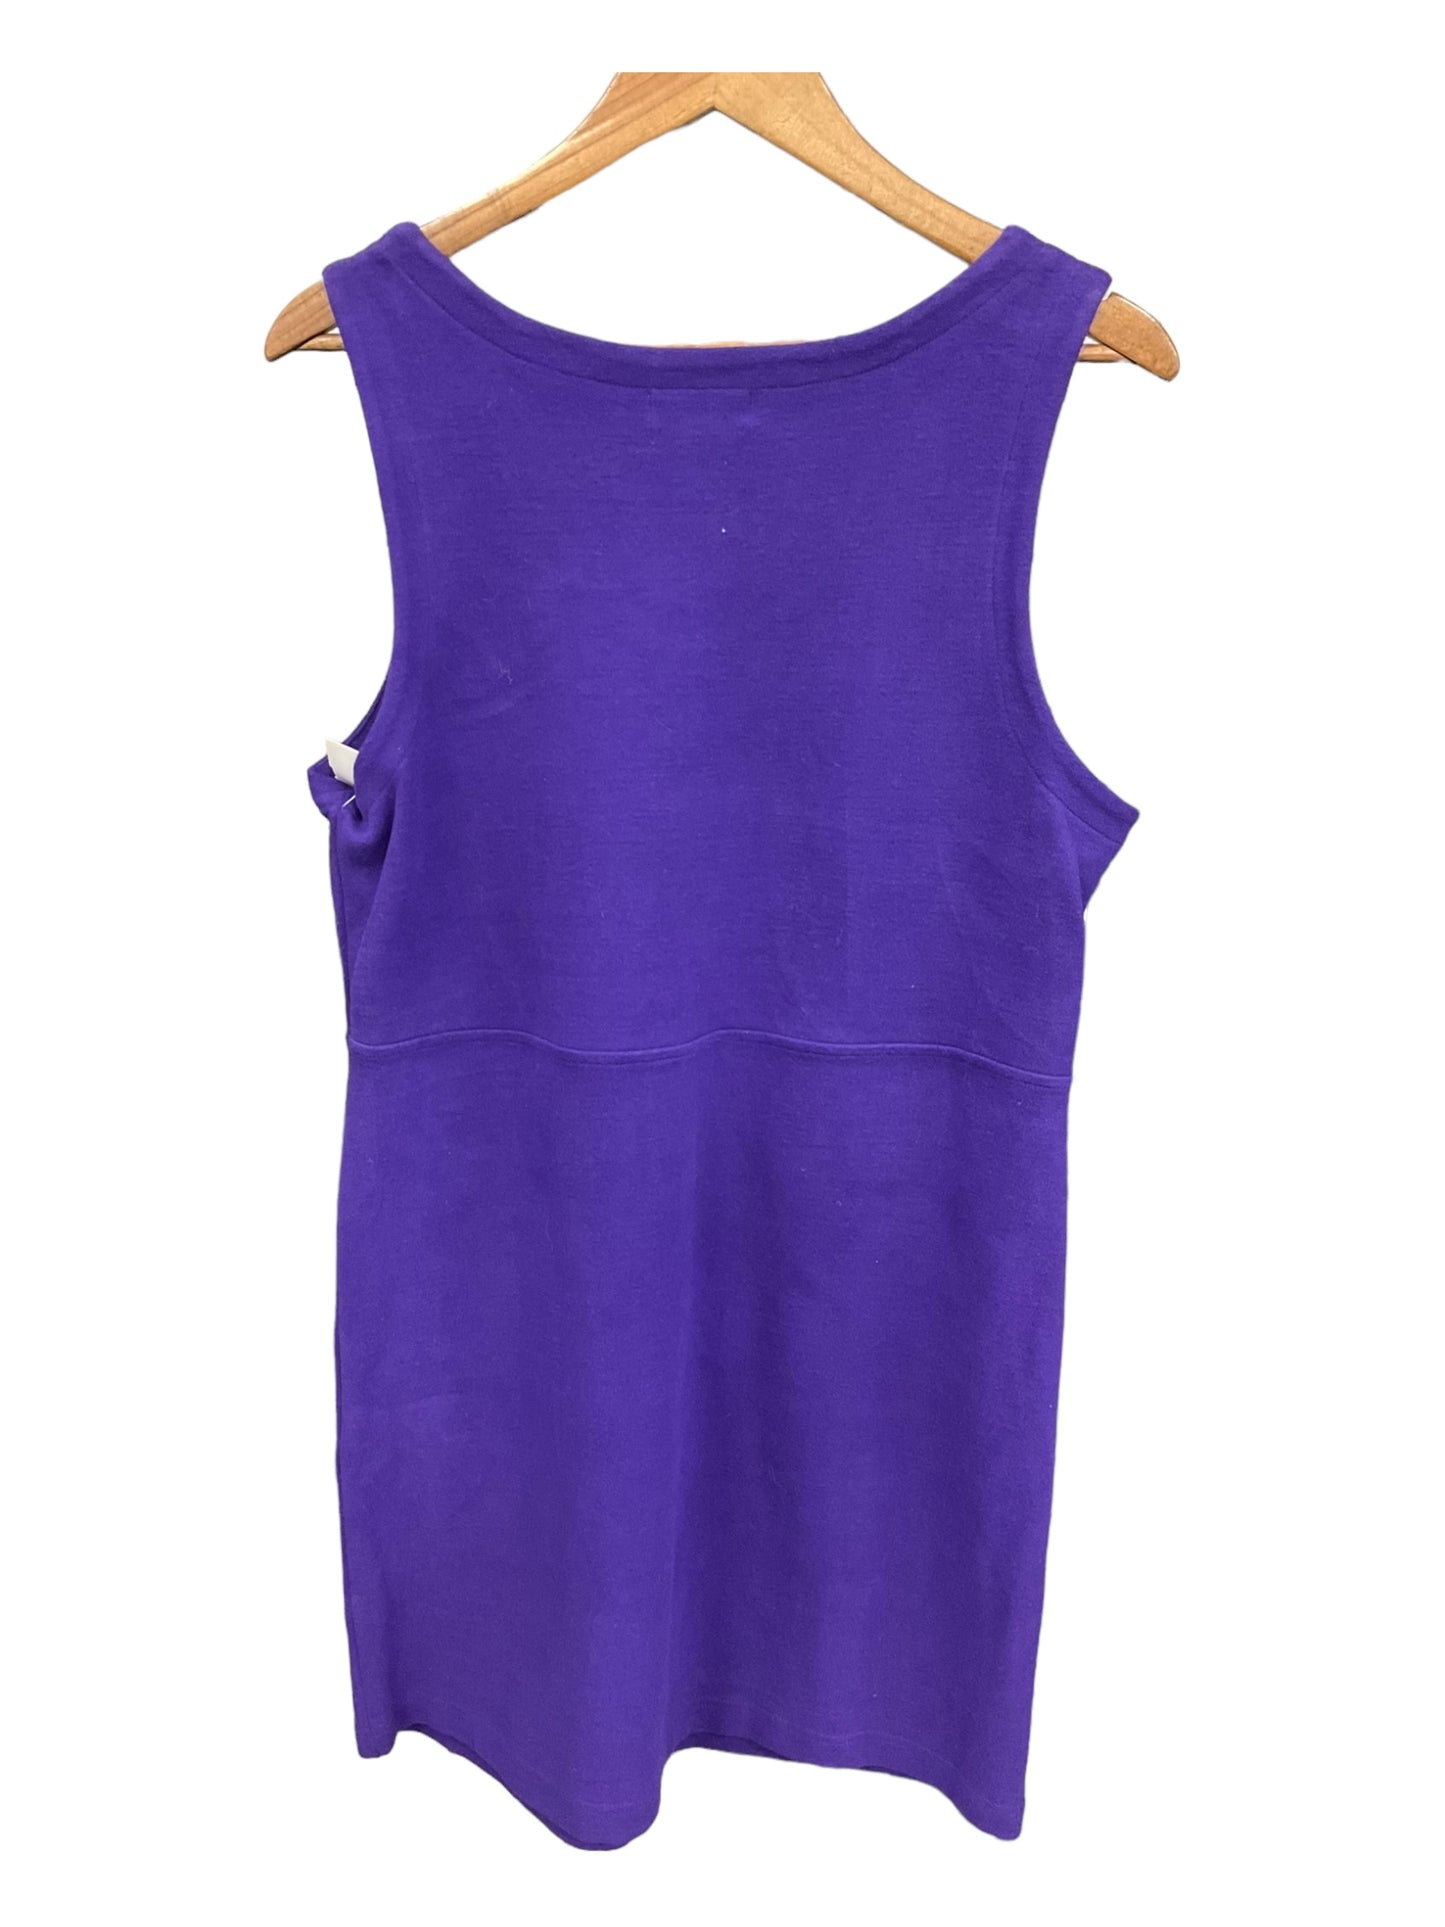 Dress Casual Midi By Jones New York  Size: M